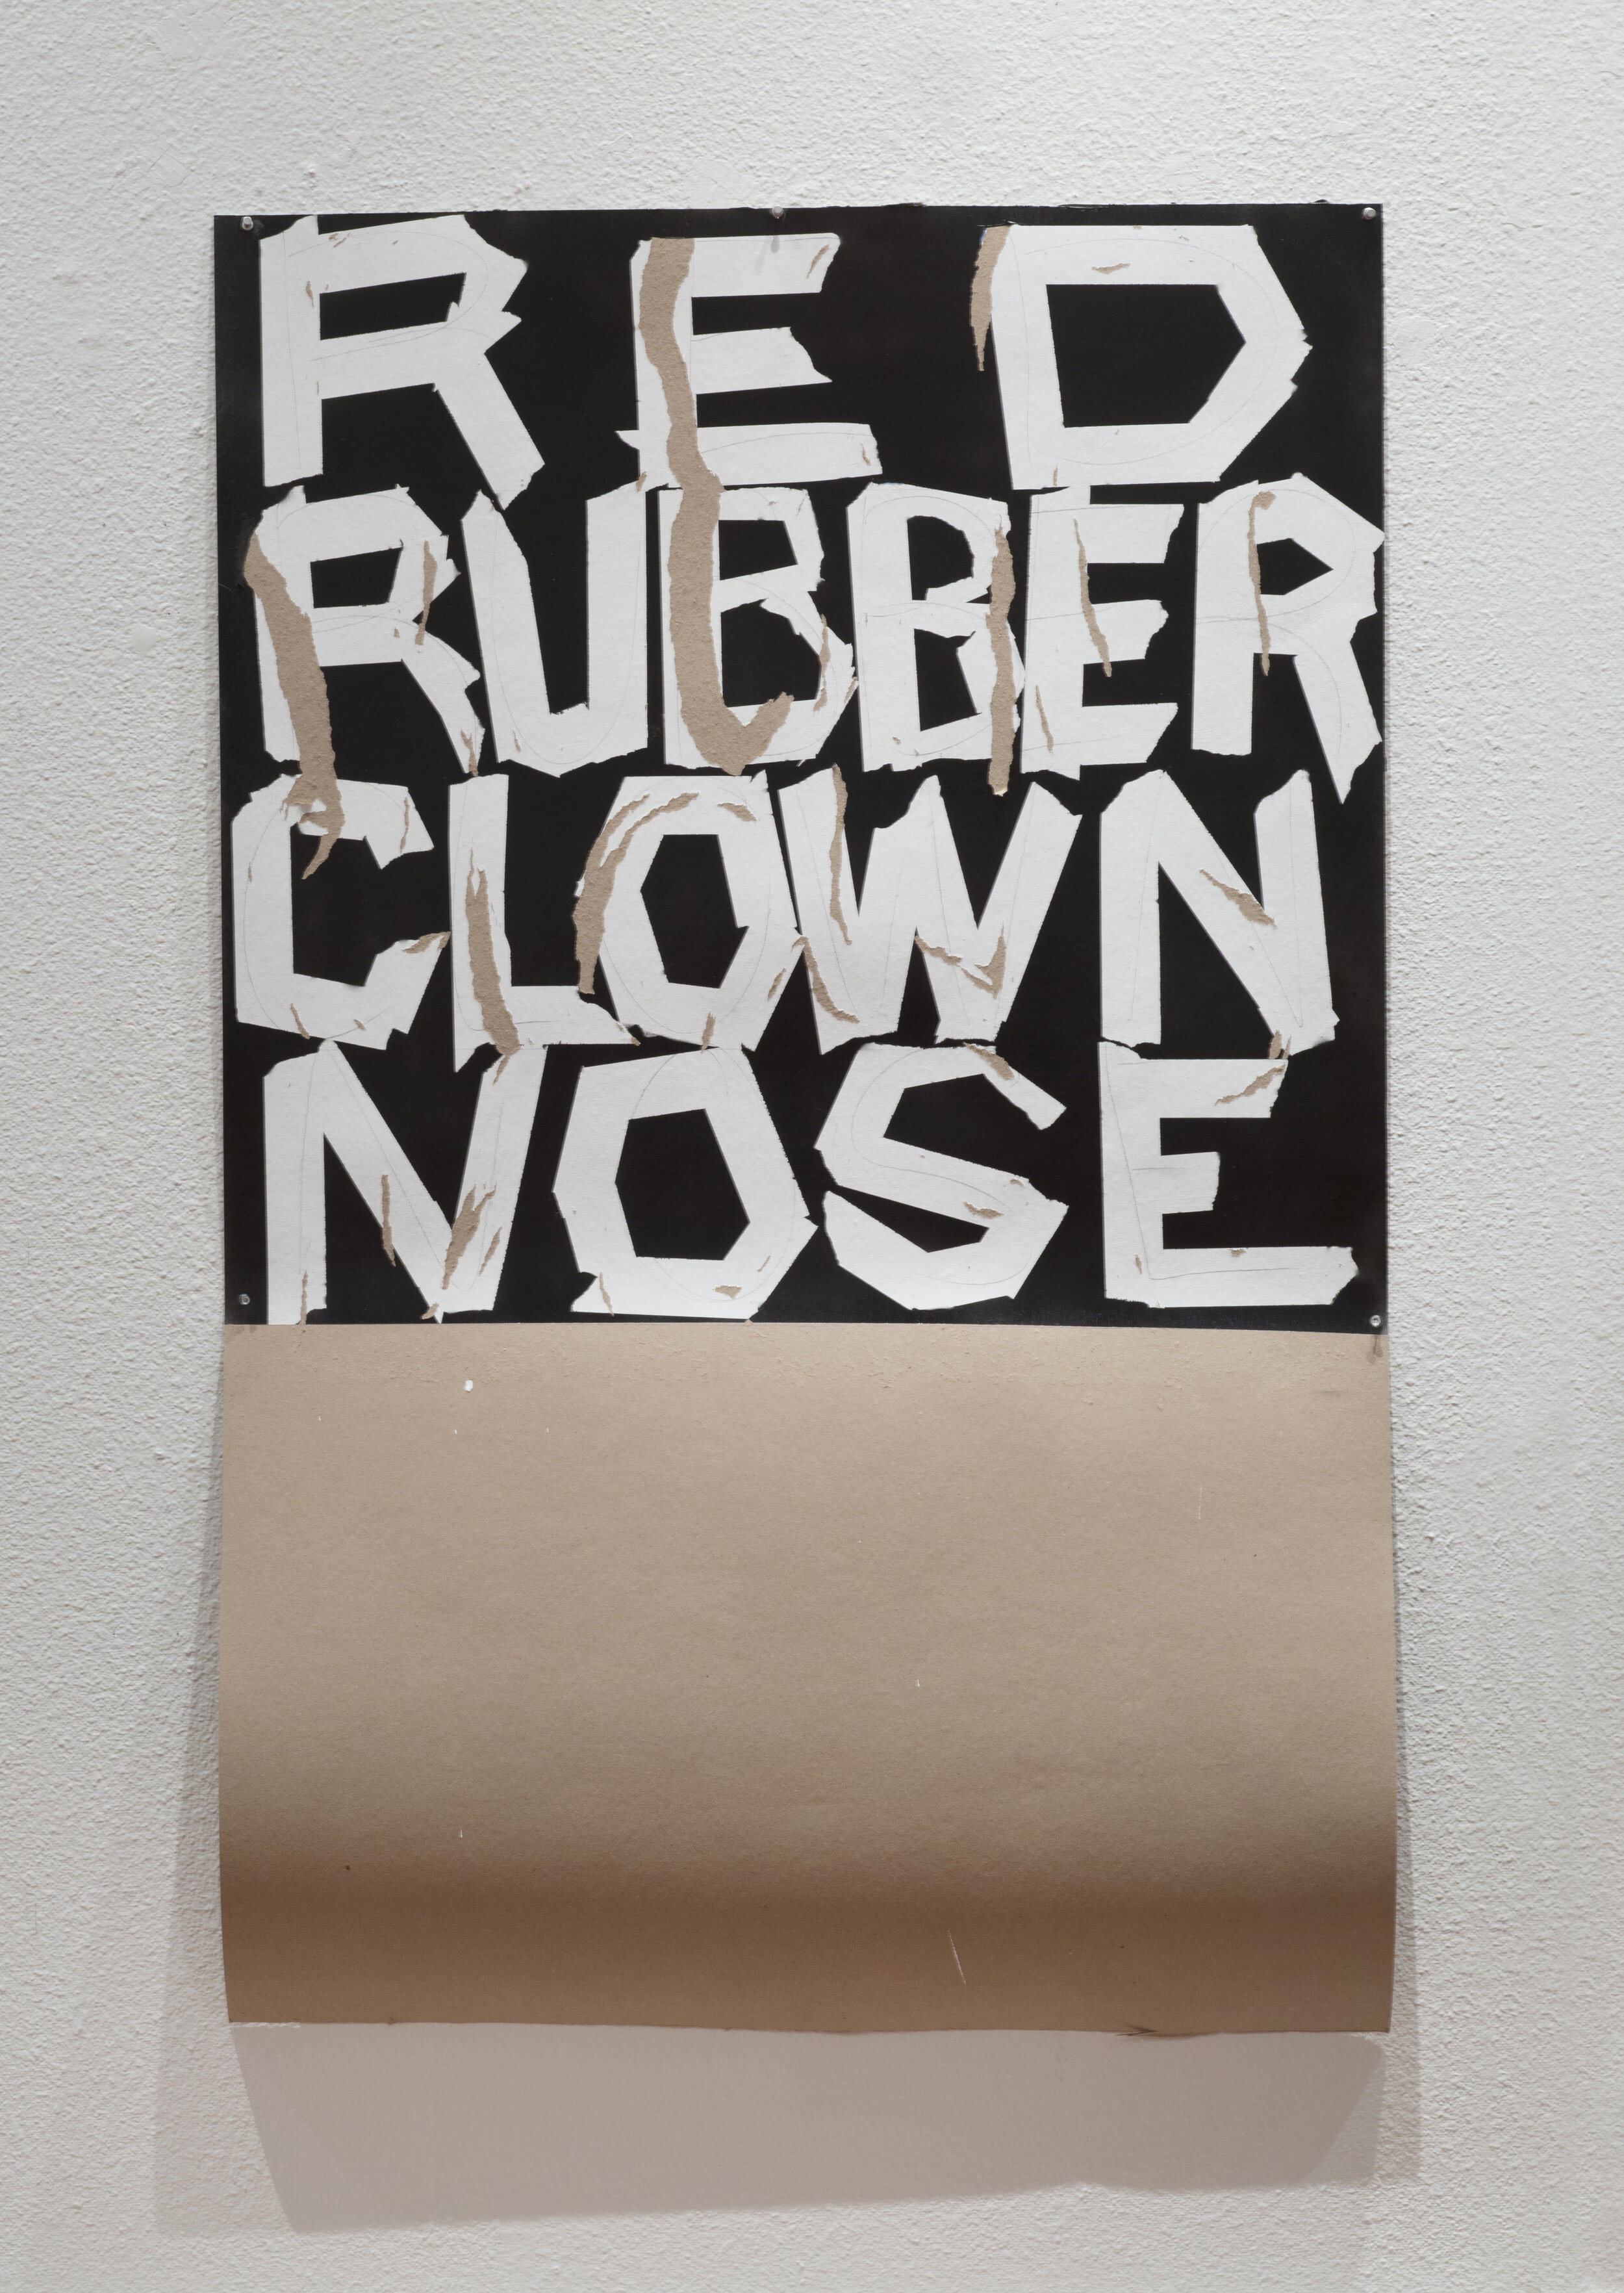 Graffiti (Red Rubber Clown Nose) 